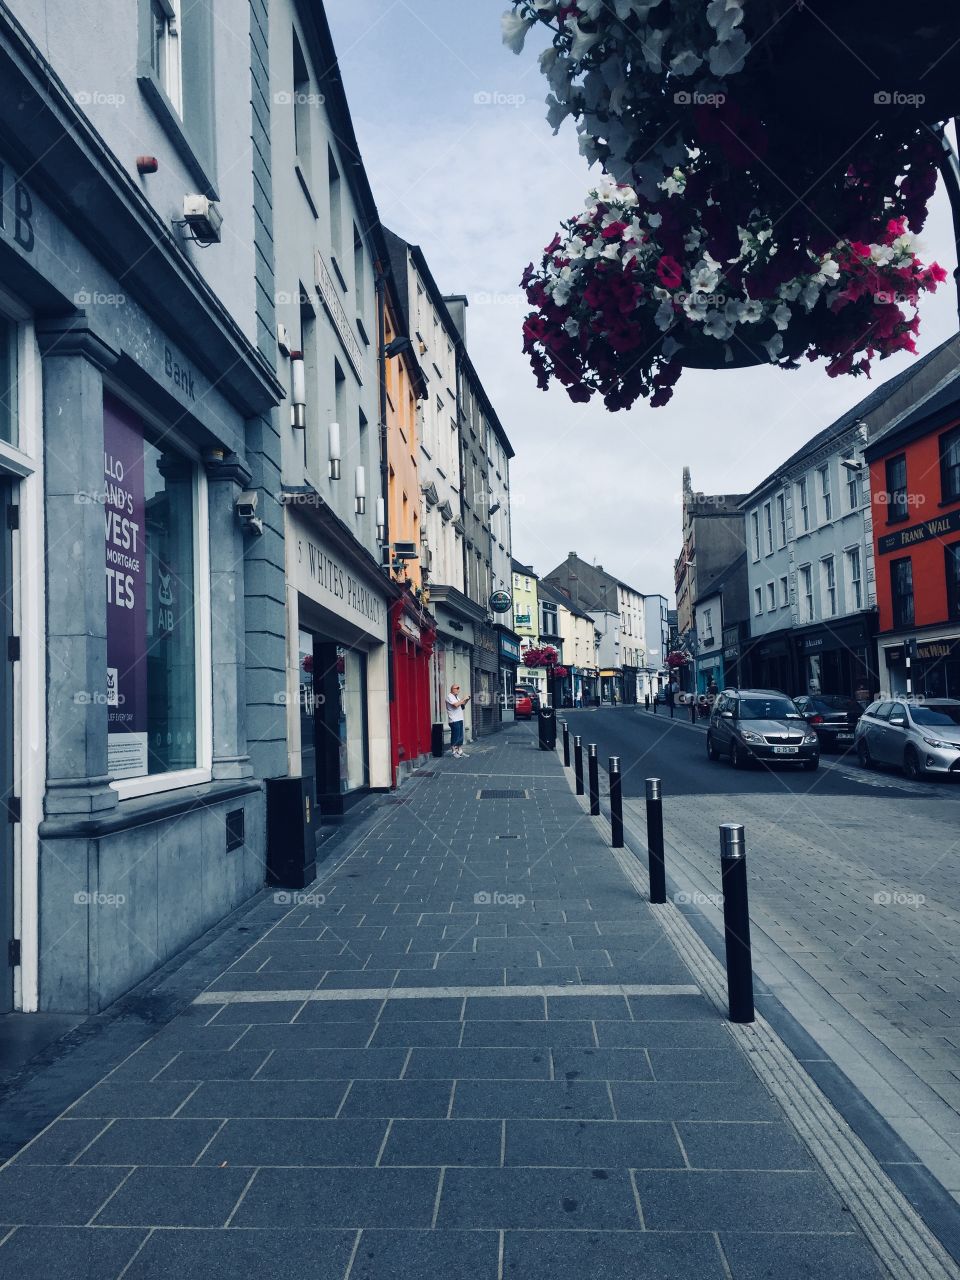 Streets of Kilkenny 